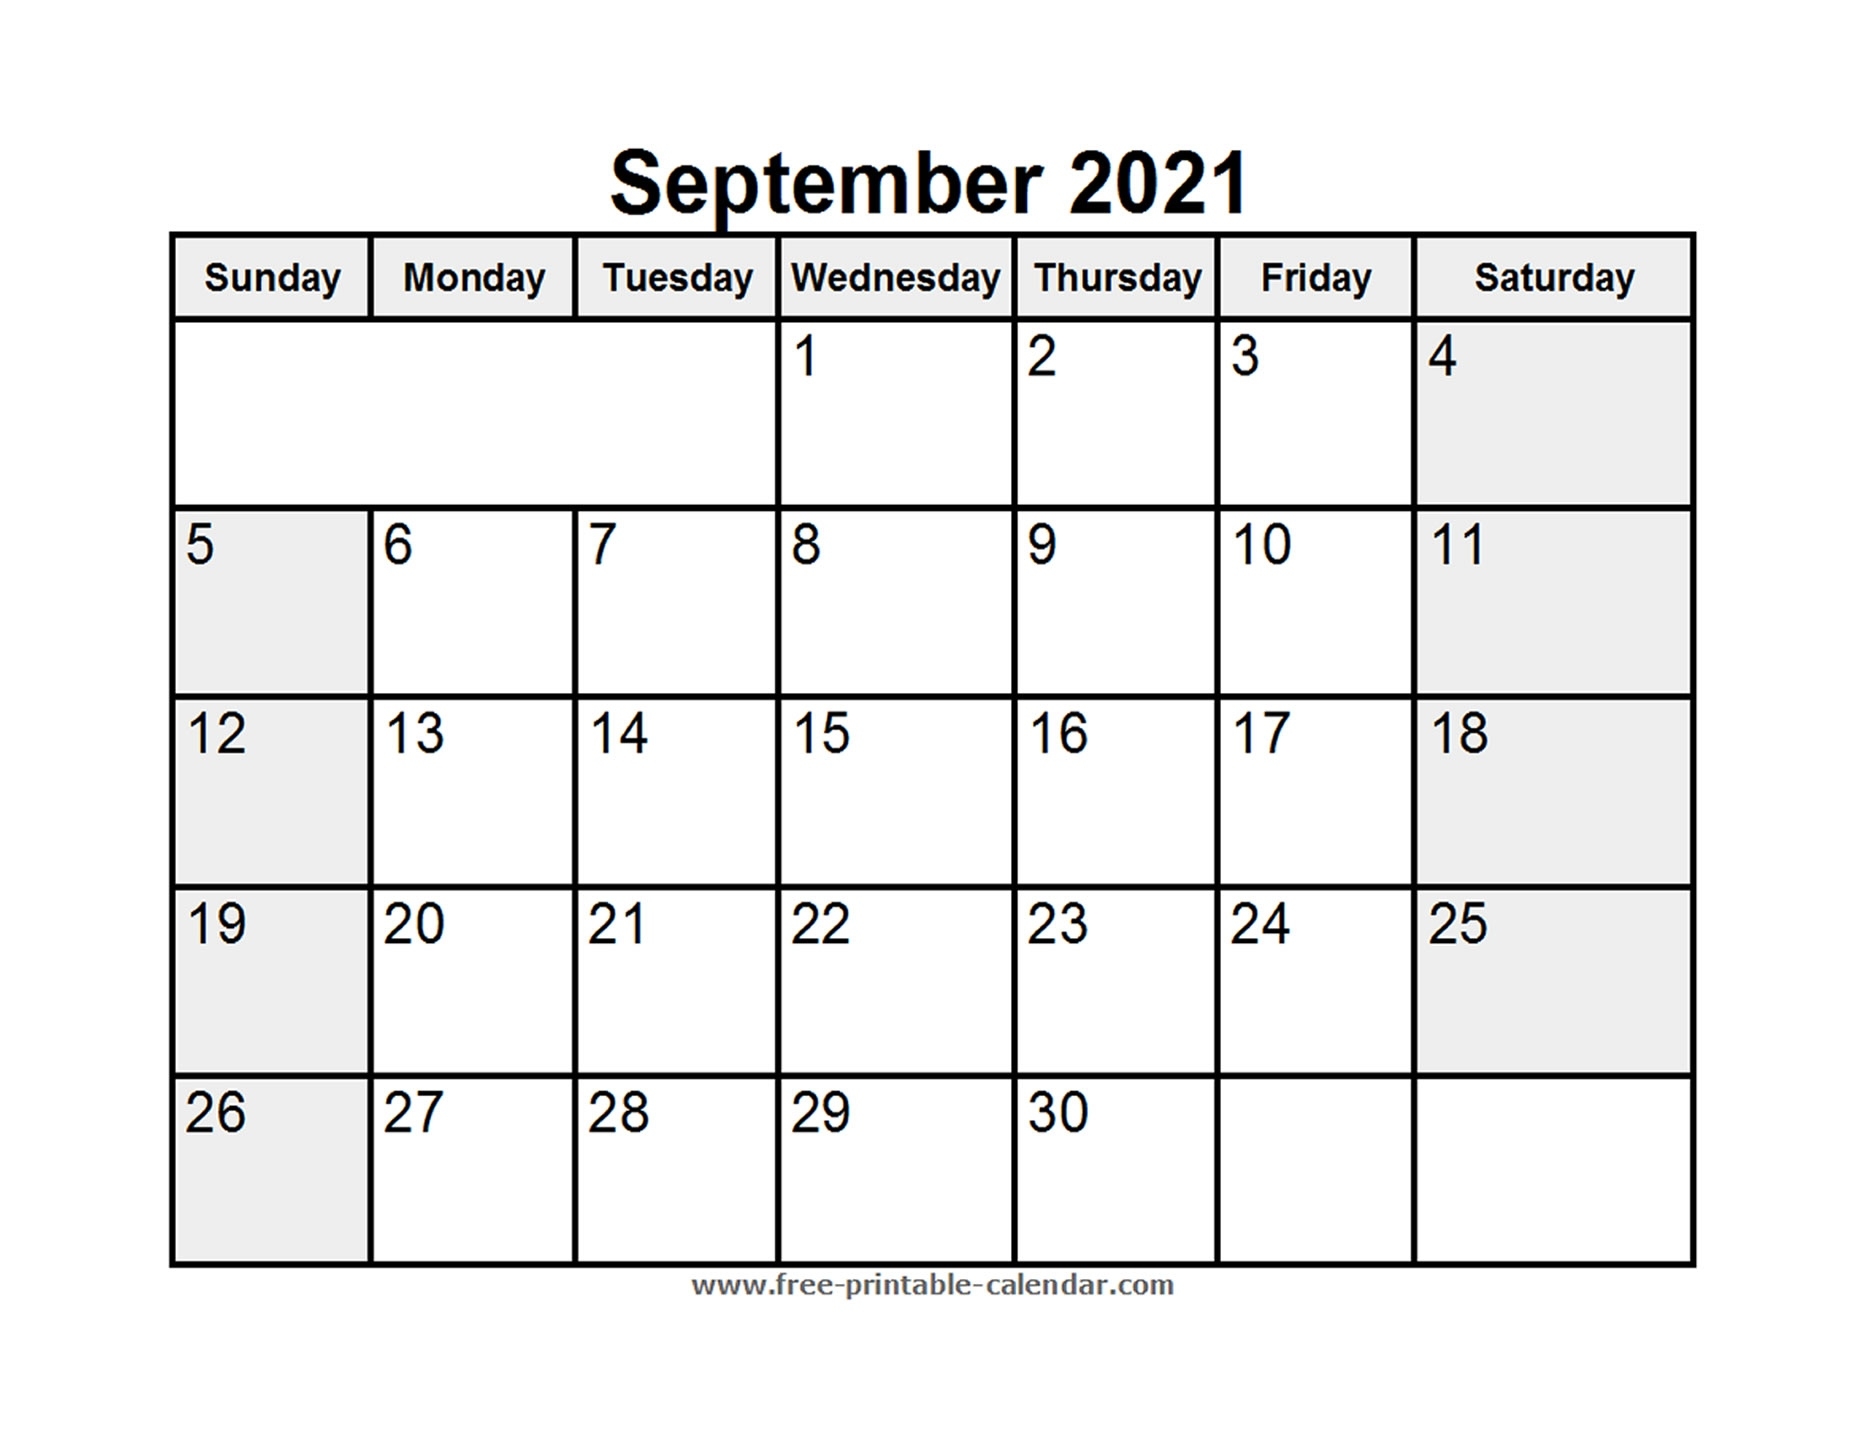 Printable September 2021 Calendar - Free-Printable-Calendar September 2021 Calendar Download